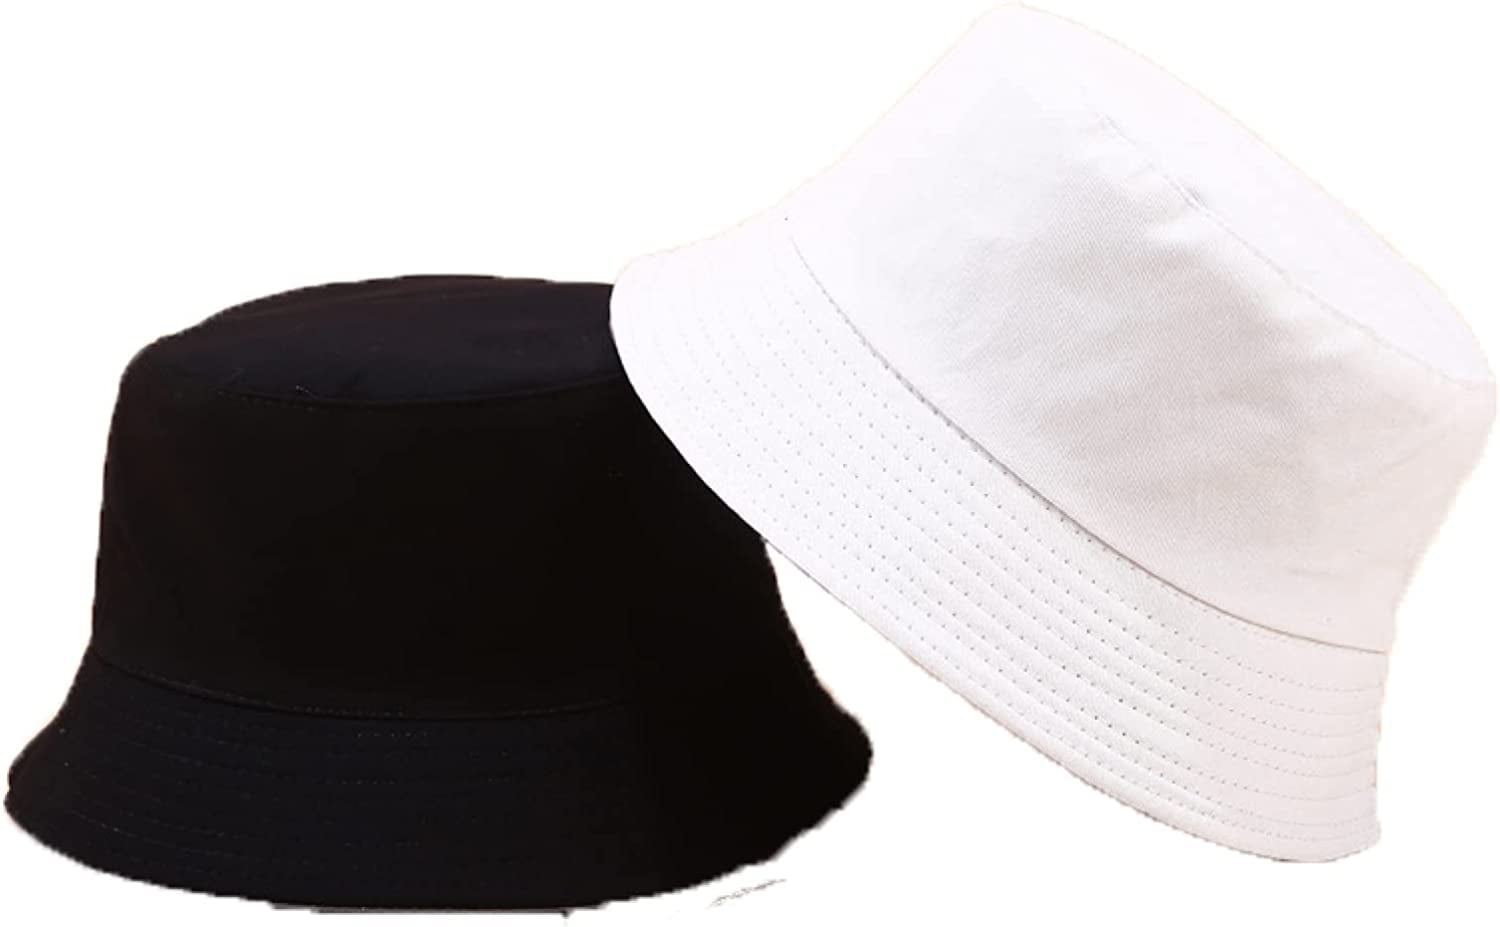 CoCopeaunts Bucket Hat for Men Double-Sided Wearing Cotton Bucket